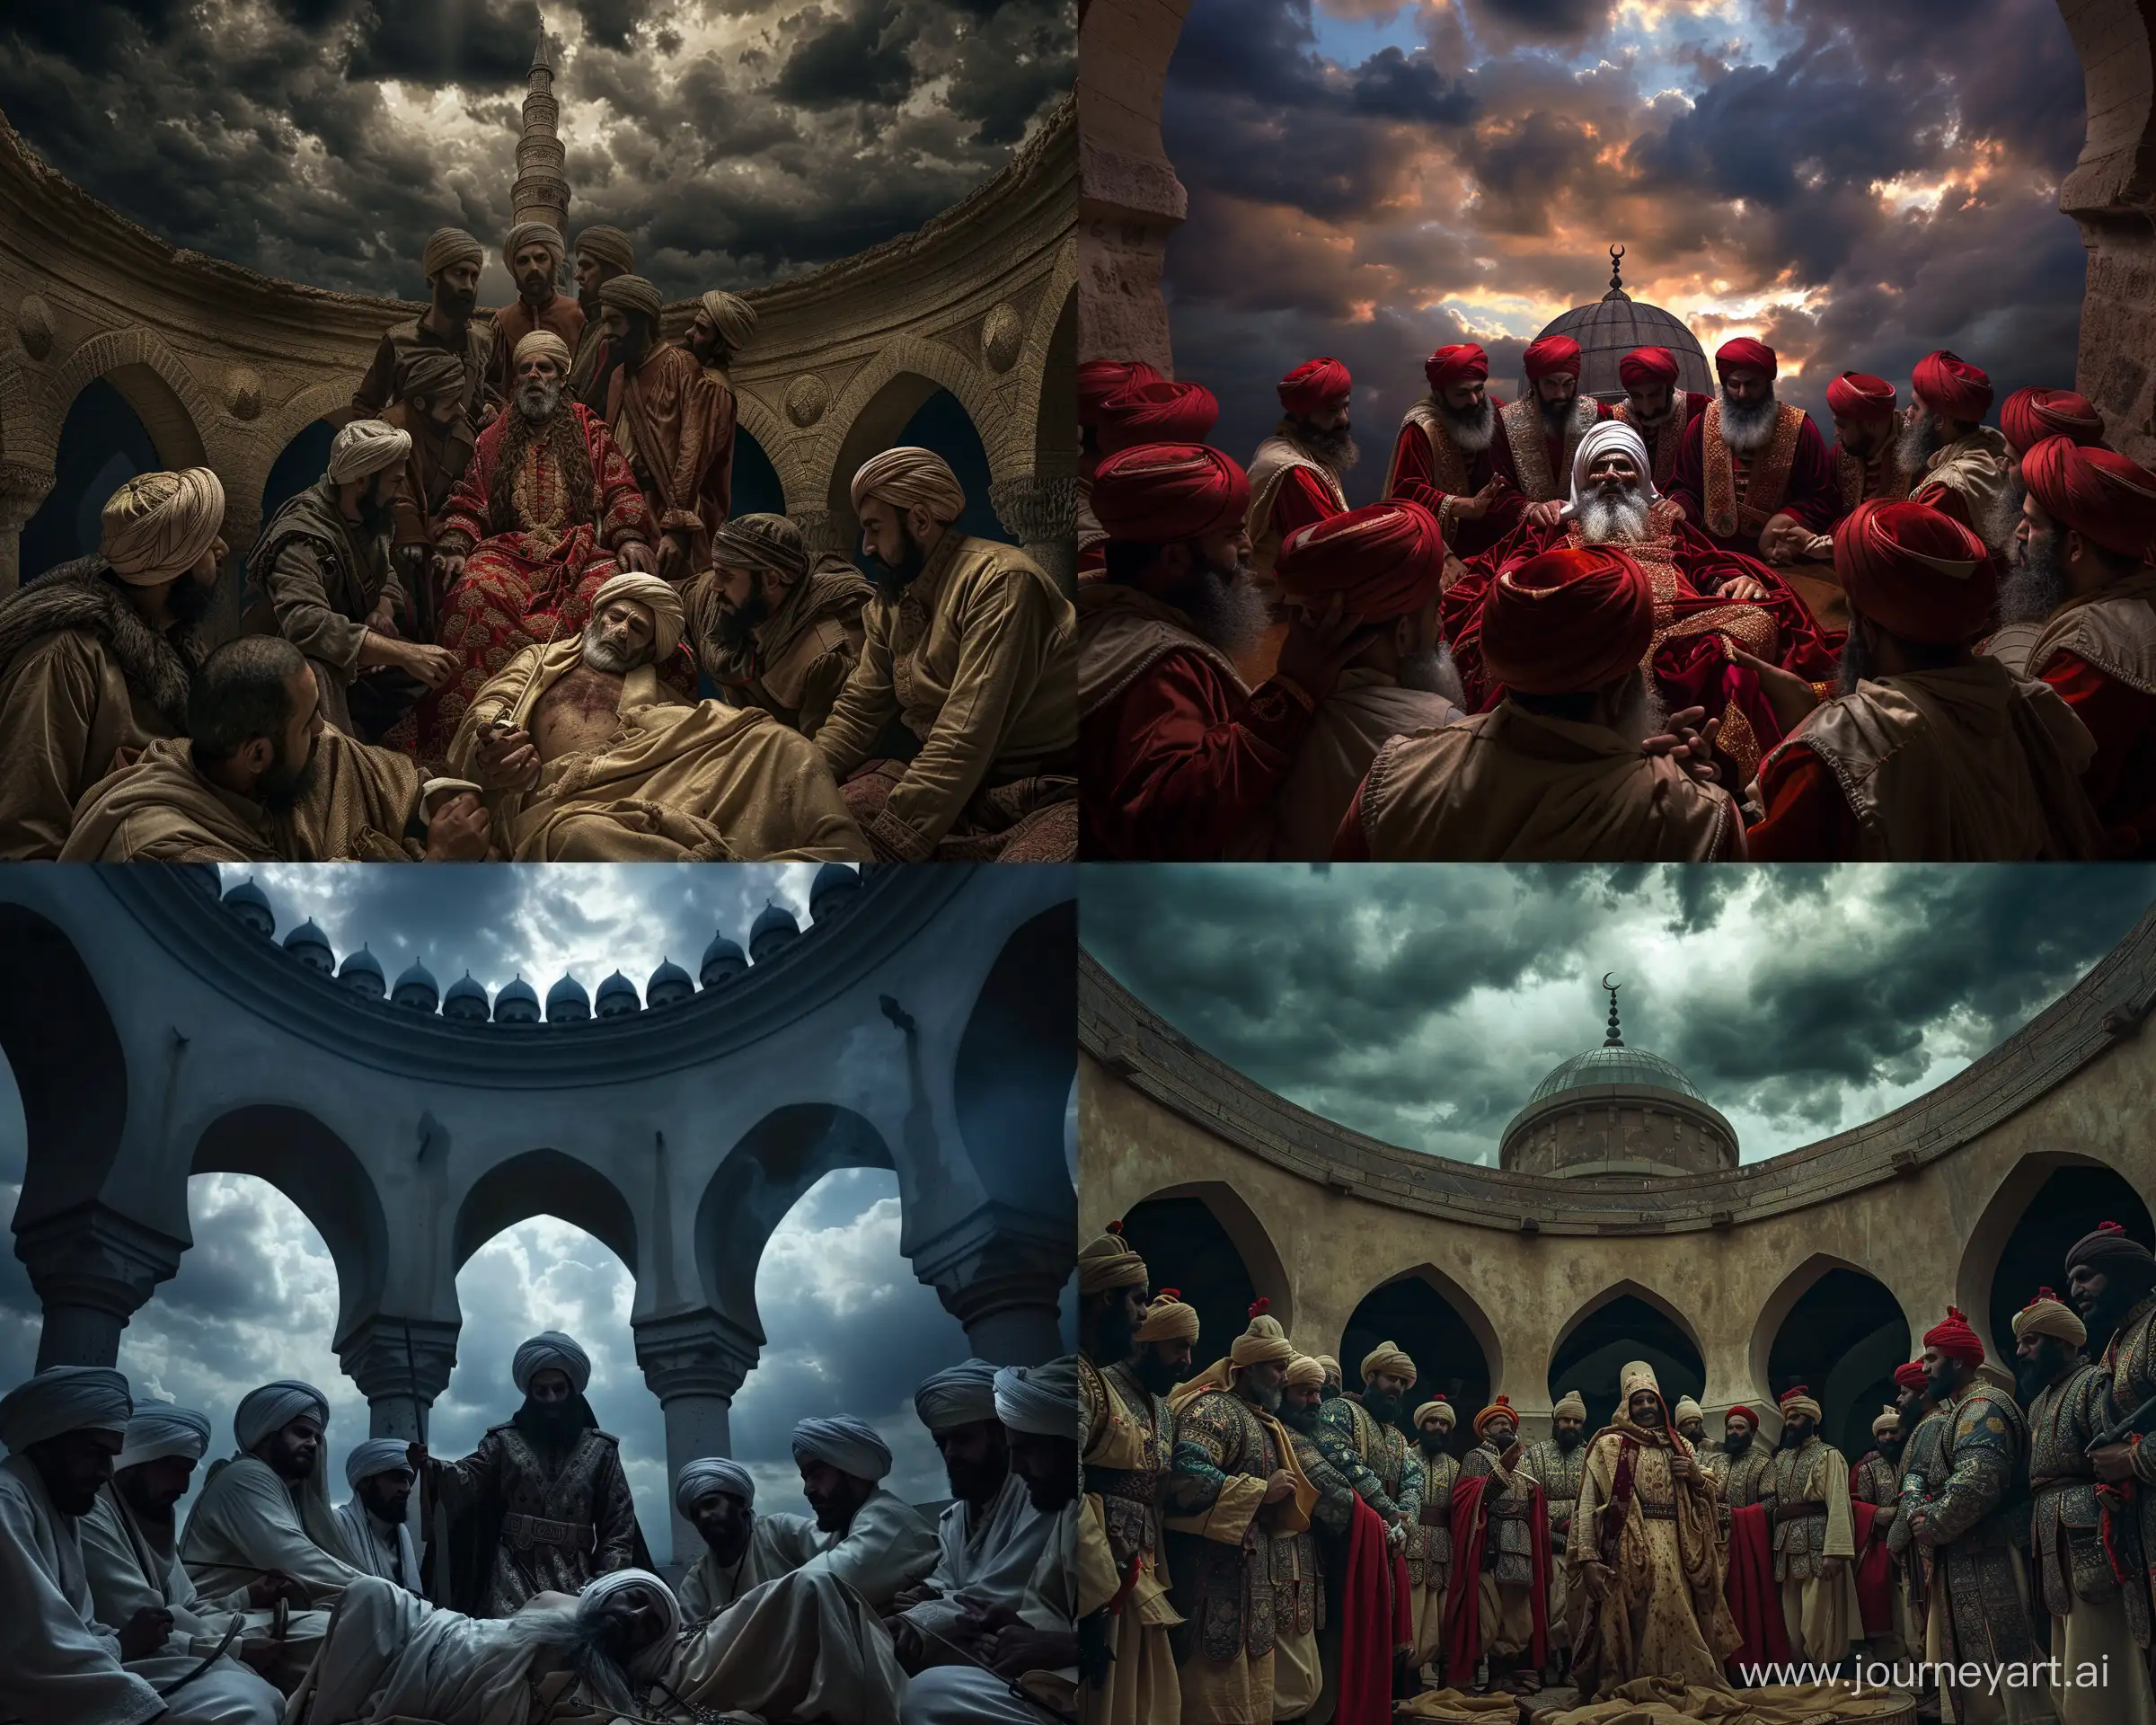 Ethereal-Scene-Fallen-Prince-Amidst-Ottoman-Janissary-in-Nighttime-Minaret-Hall